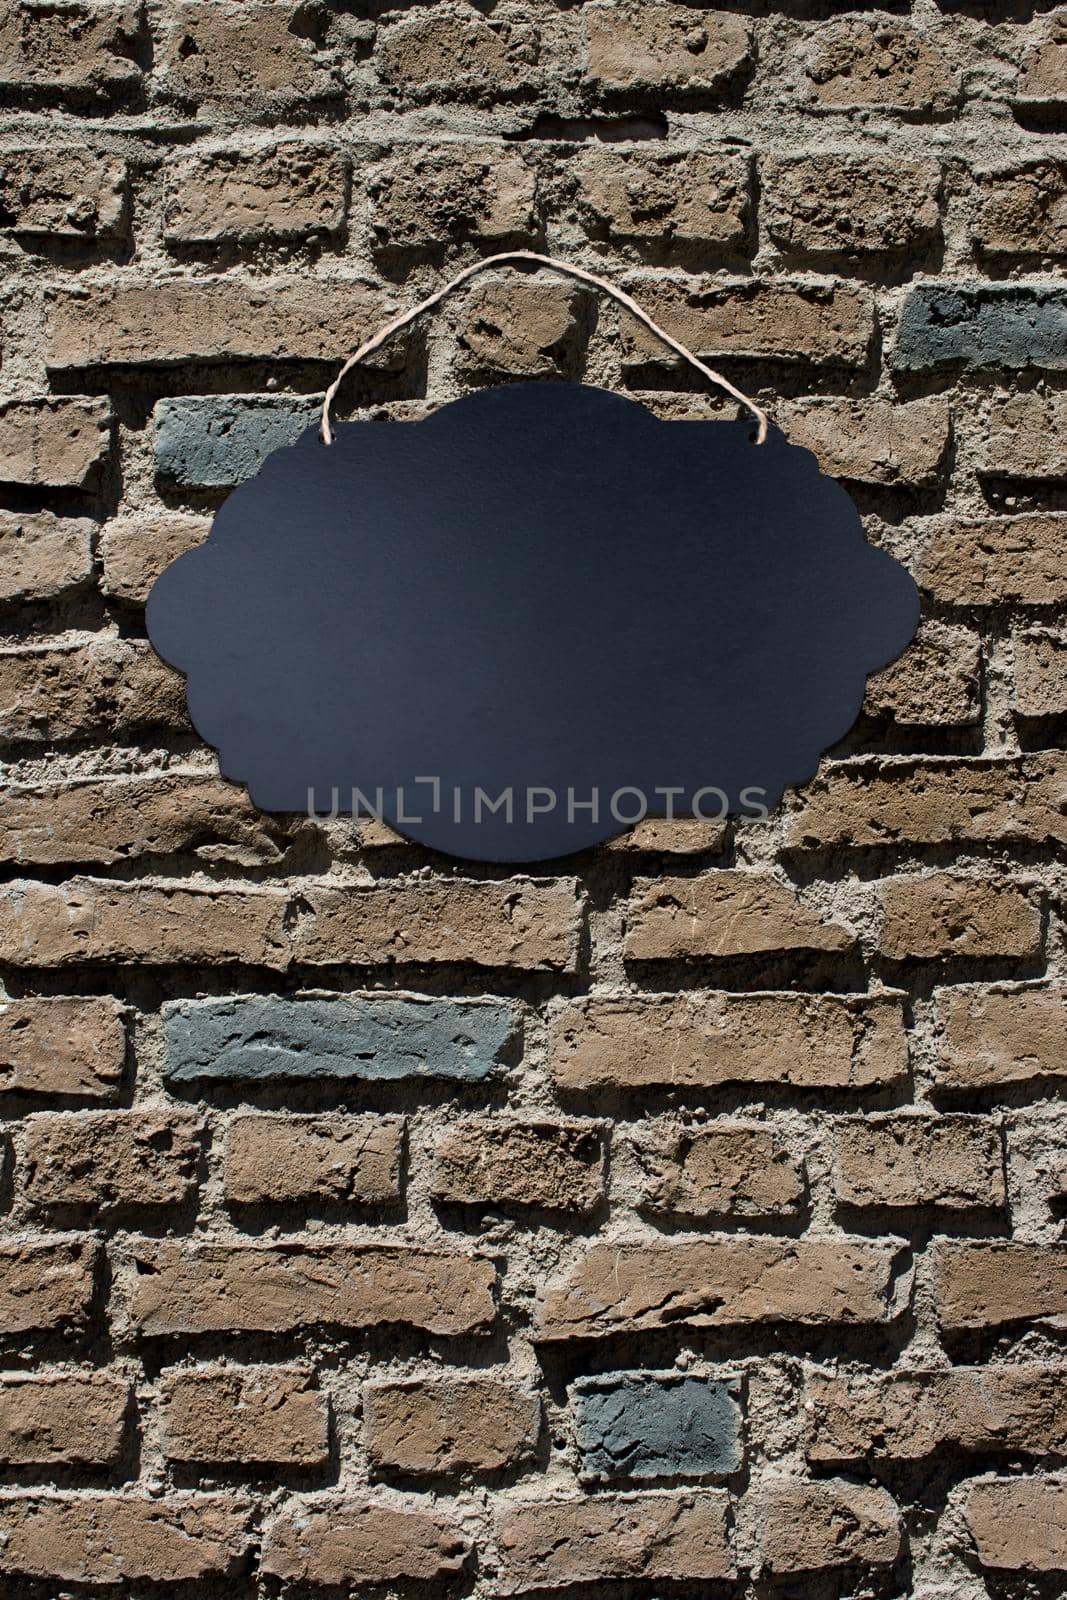 Black Empty Sign Board on brick background by berkay